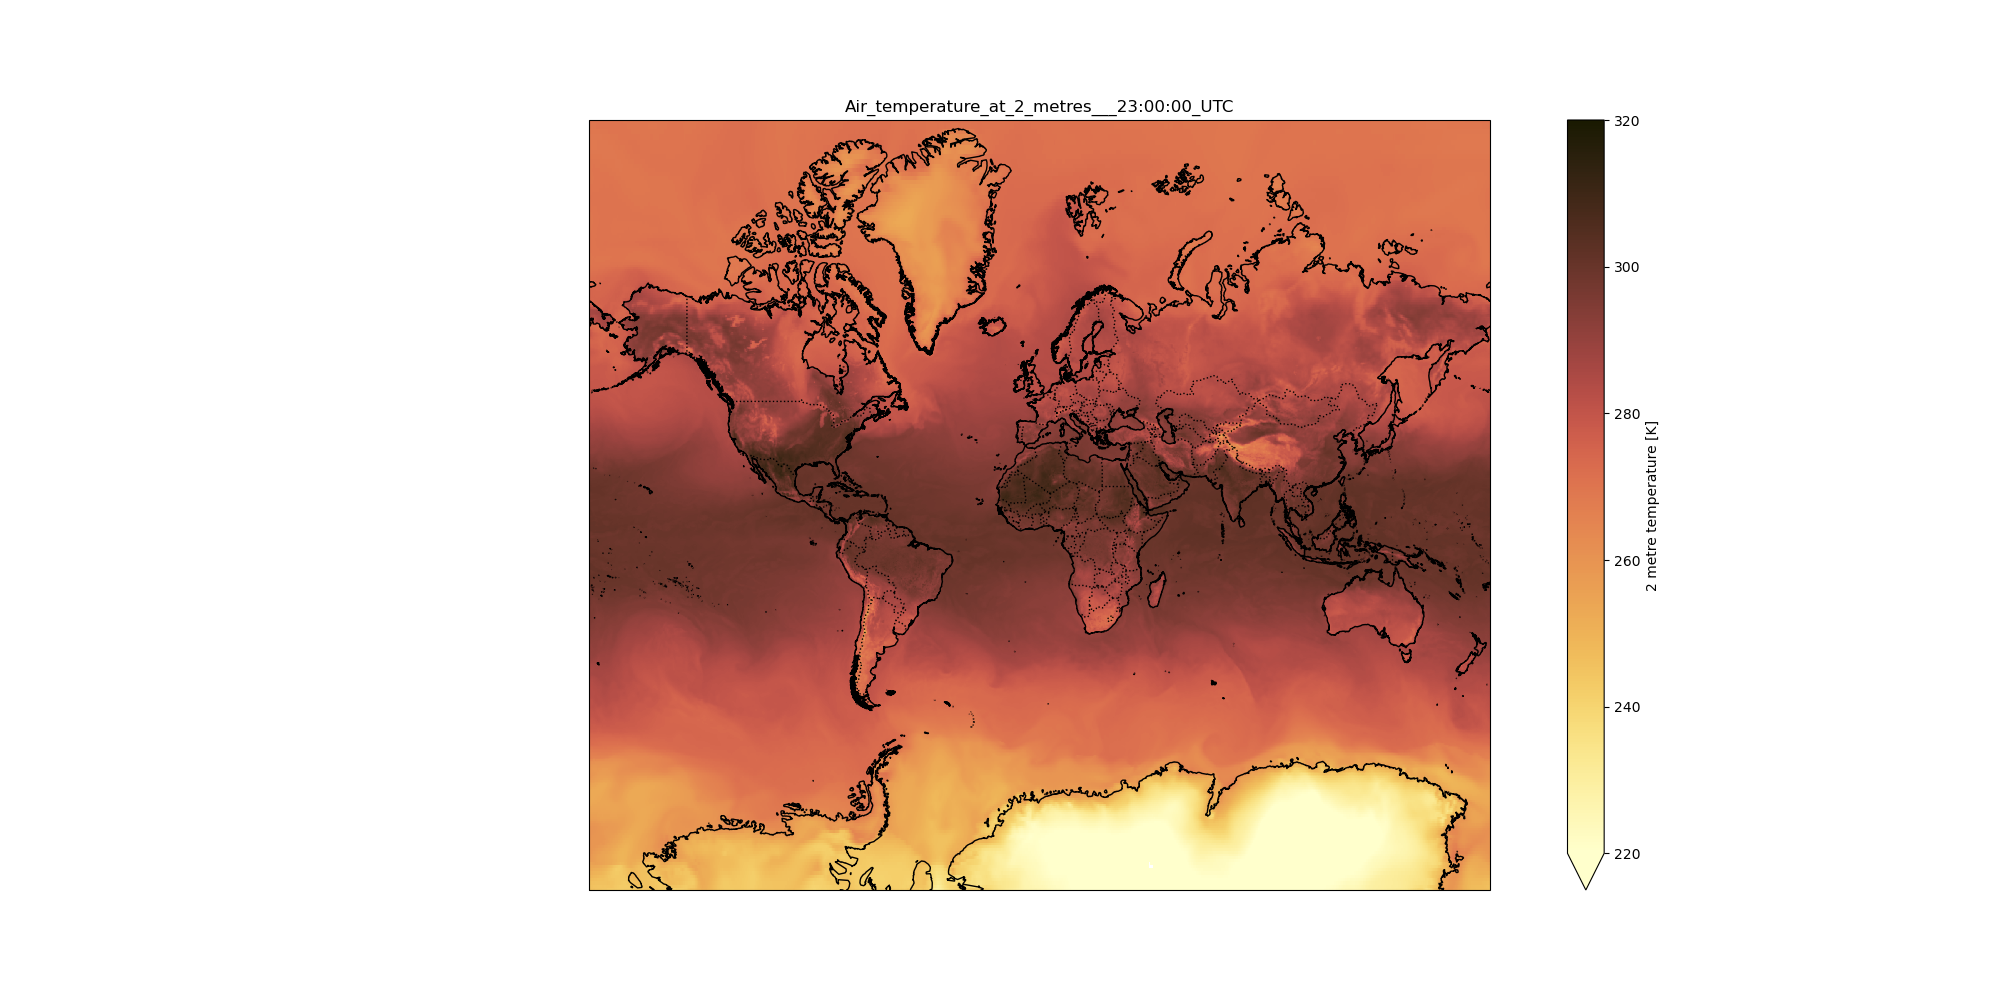 ECMWF Reanalysis Air temperature a 2 metres on 2022-05-31 at 23:00:00 UTC. 